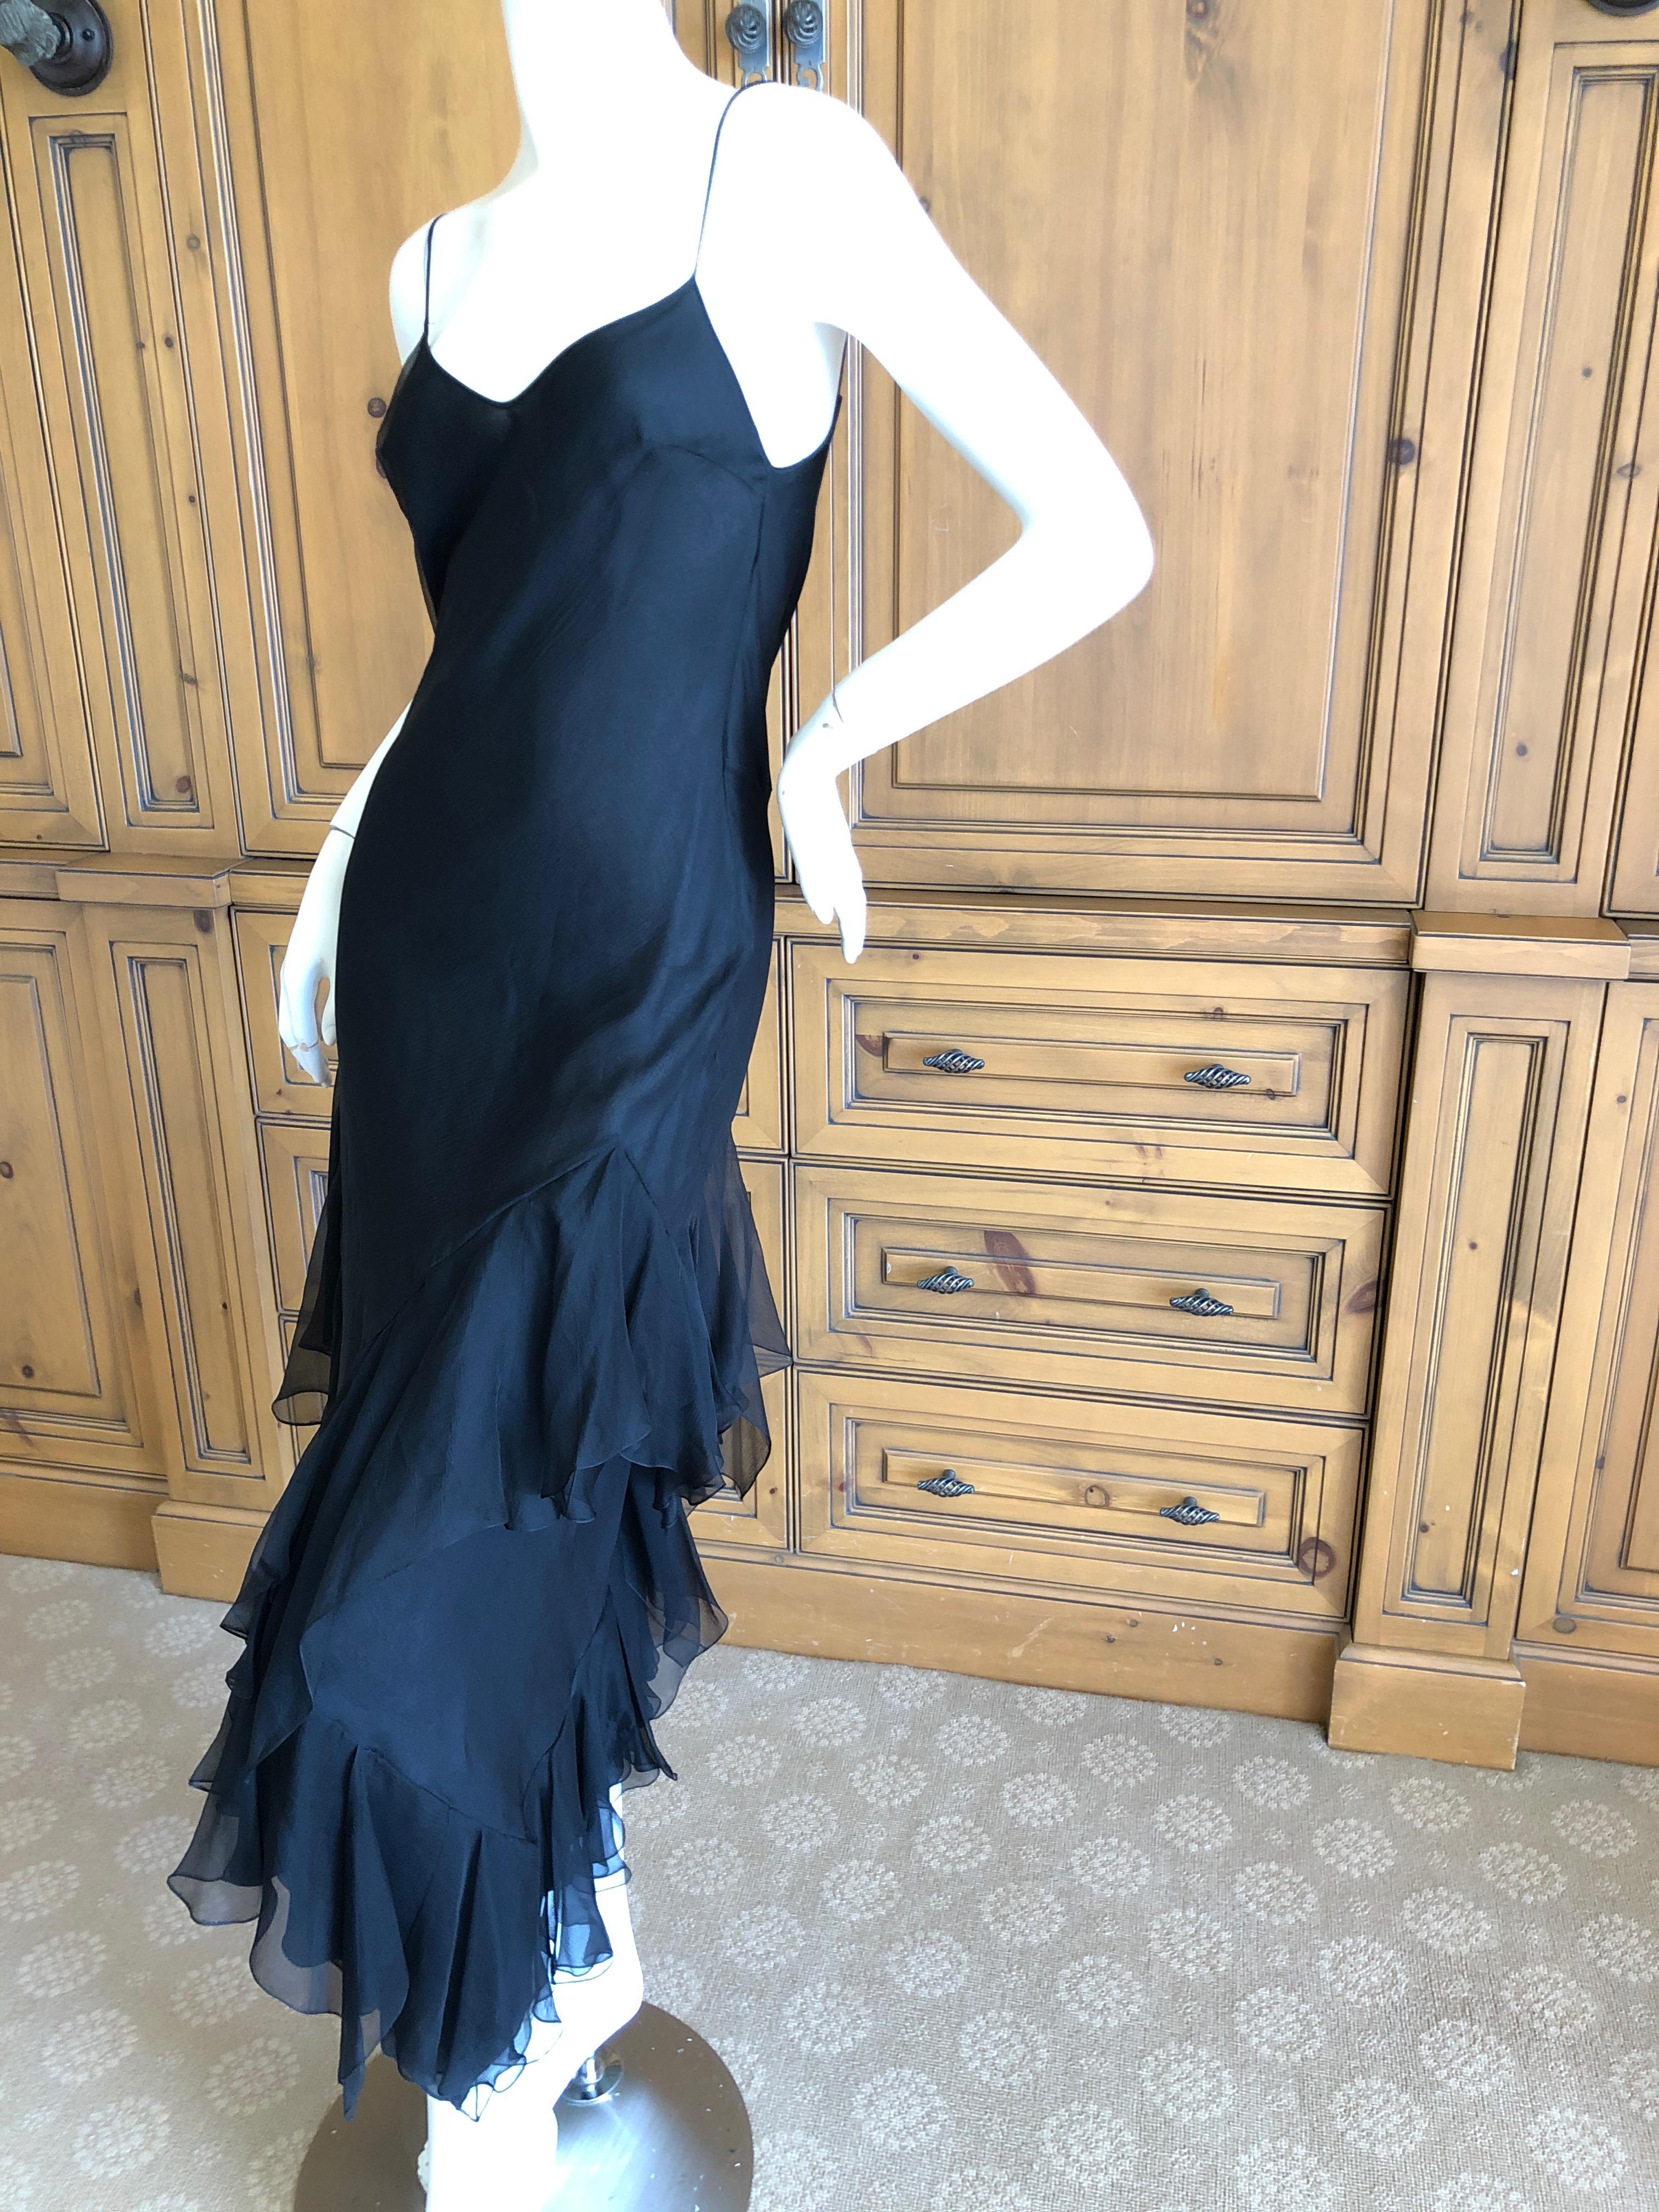 John Galliano 1990's Bias Cut Black Slip Dress with Flamenco Ruffles.
So pretty, simple and elegant .
Size 40
Bust 36